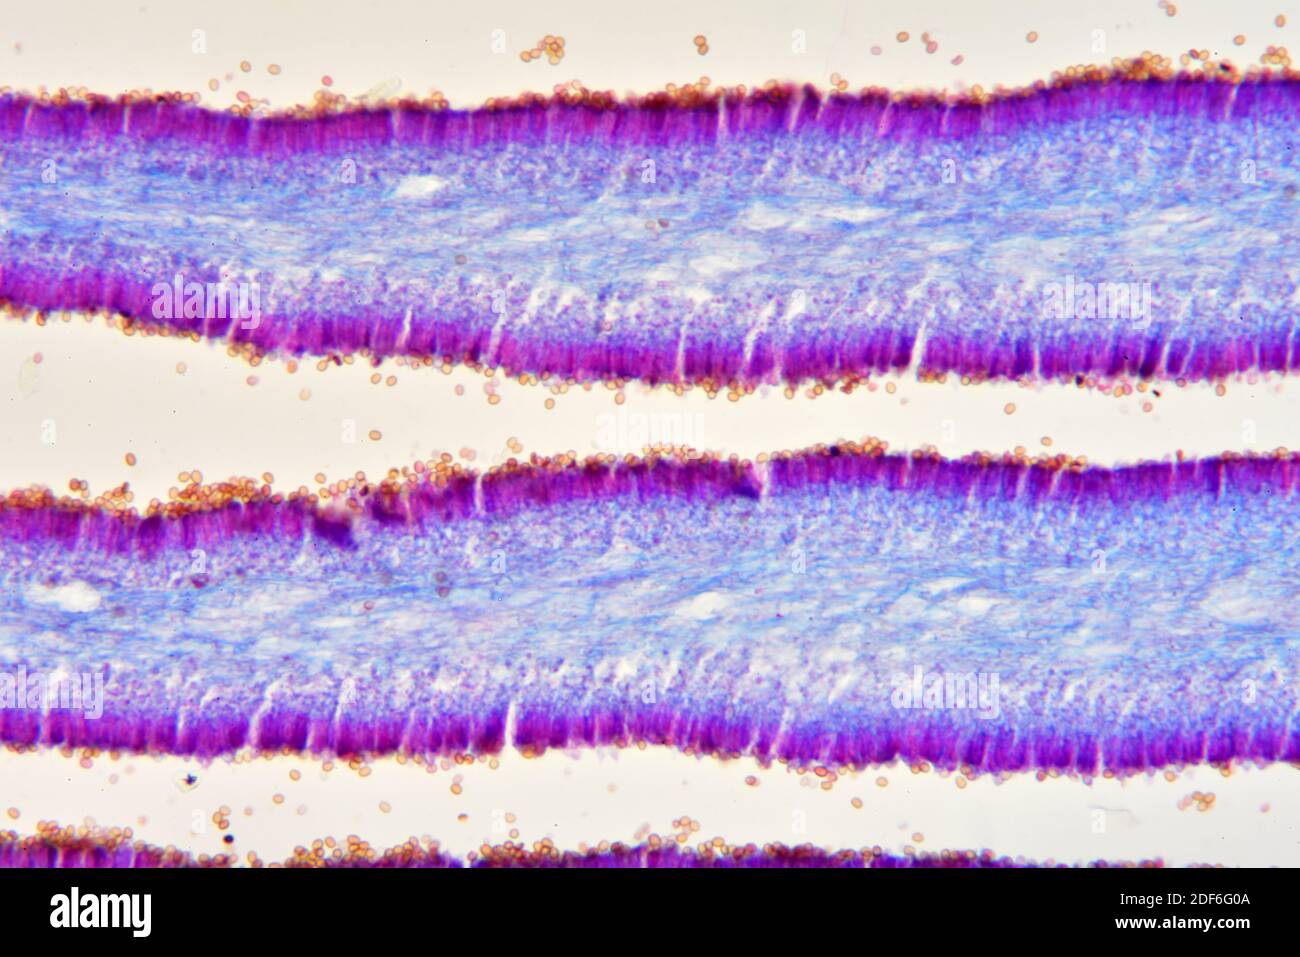 Psalliota gills with basidiospores. Optical microscope X200. Stock Photo